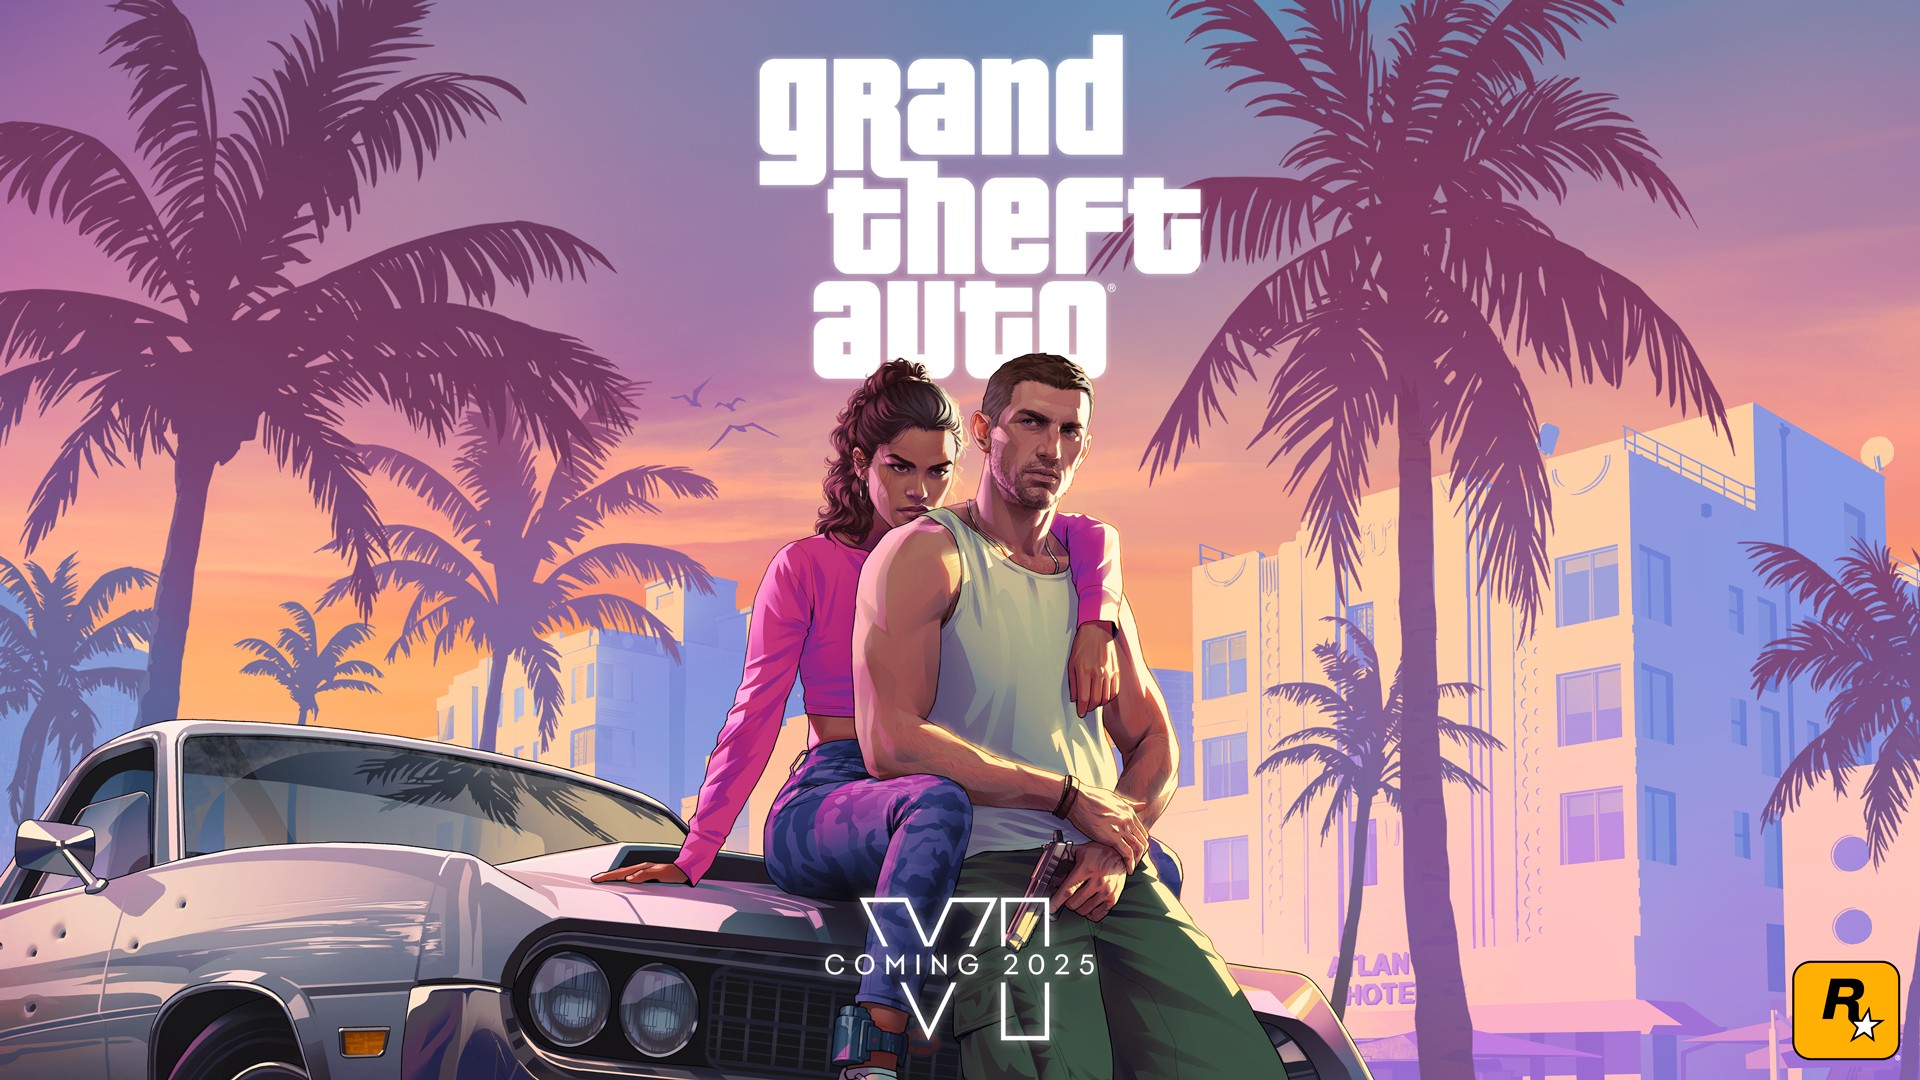 Baixe GTA III, San Andreas e Vice City de graça! Netflix libera jogos da  Rockstar para assinantes 